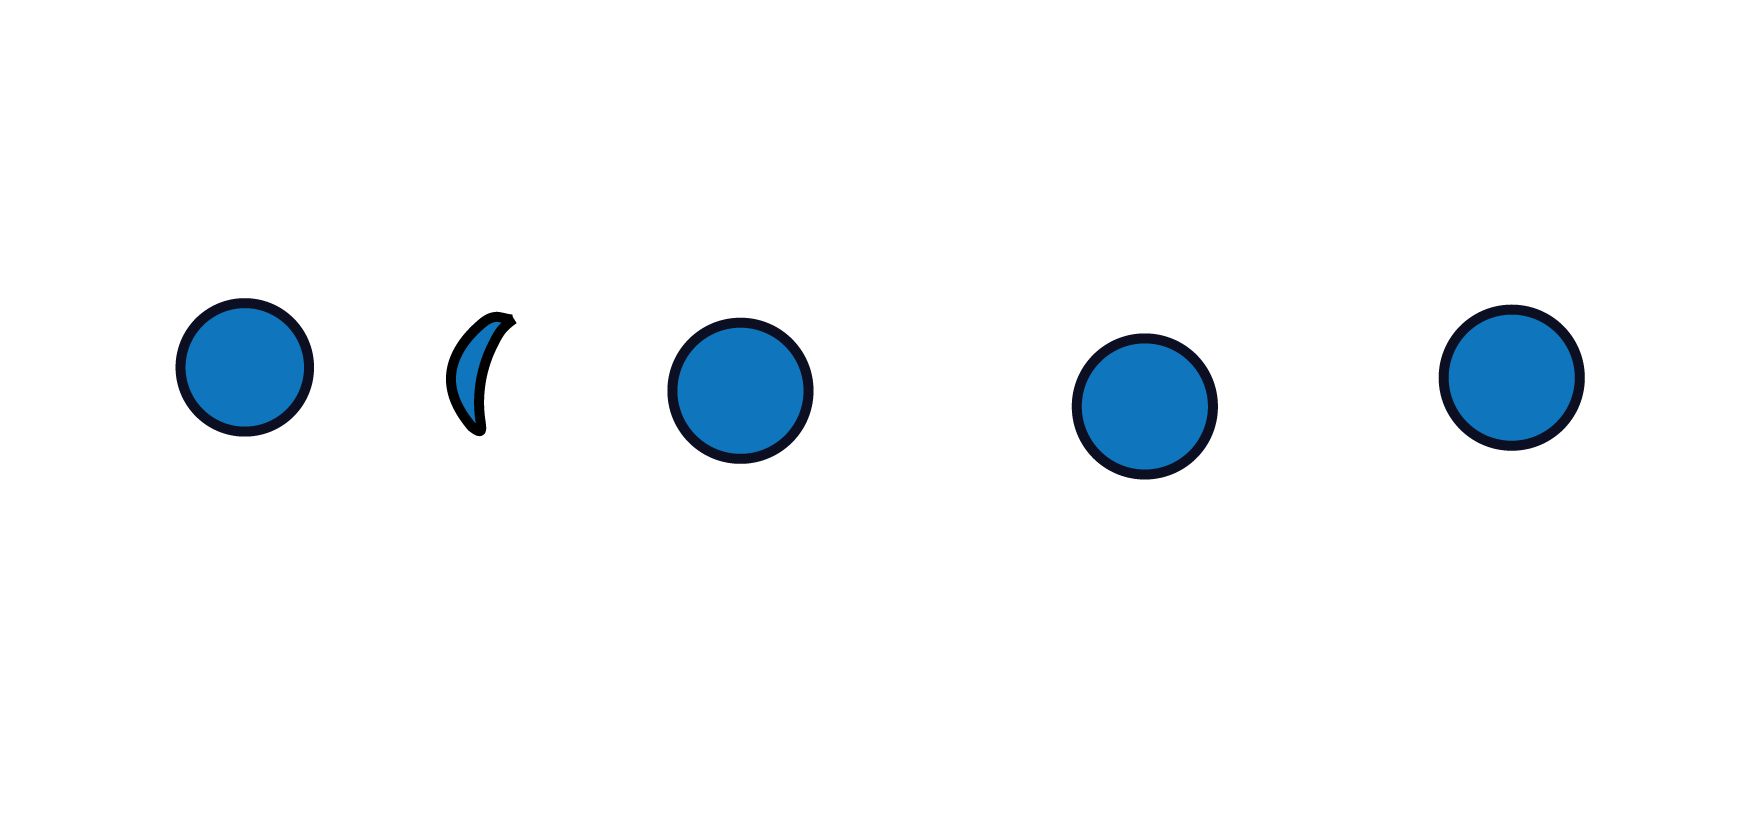 Chicago Mastermix 6